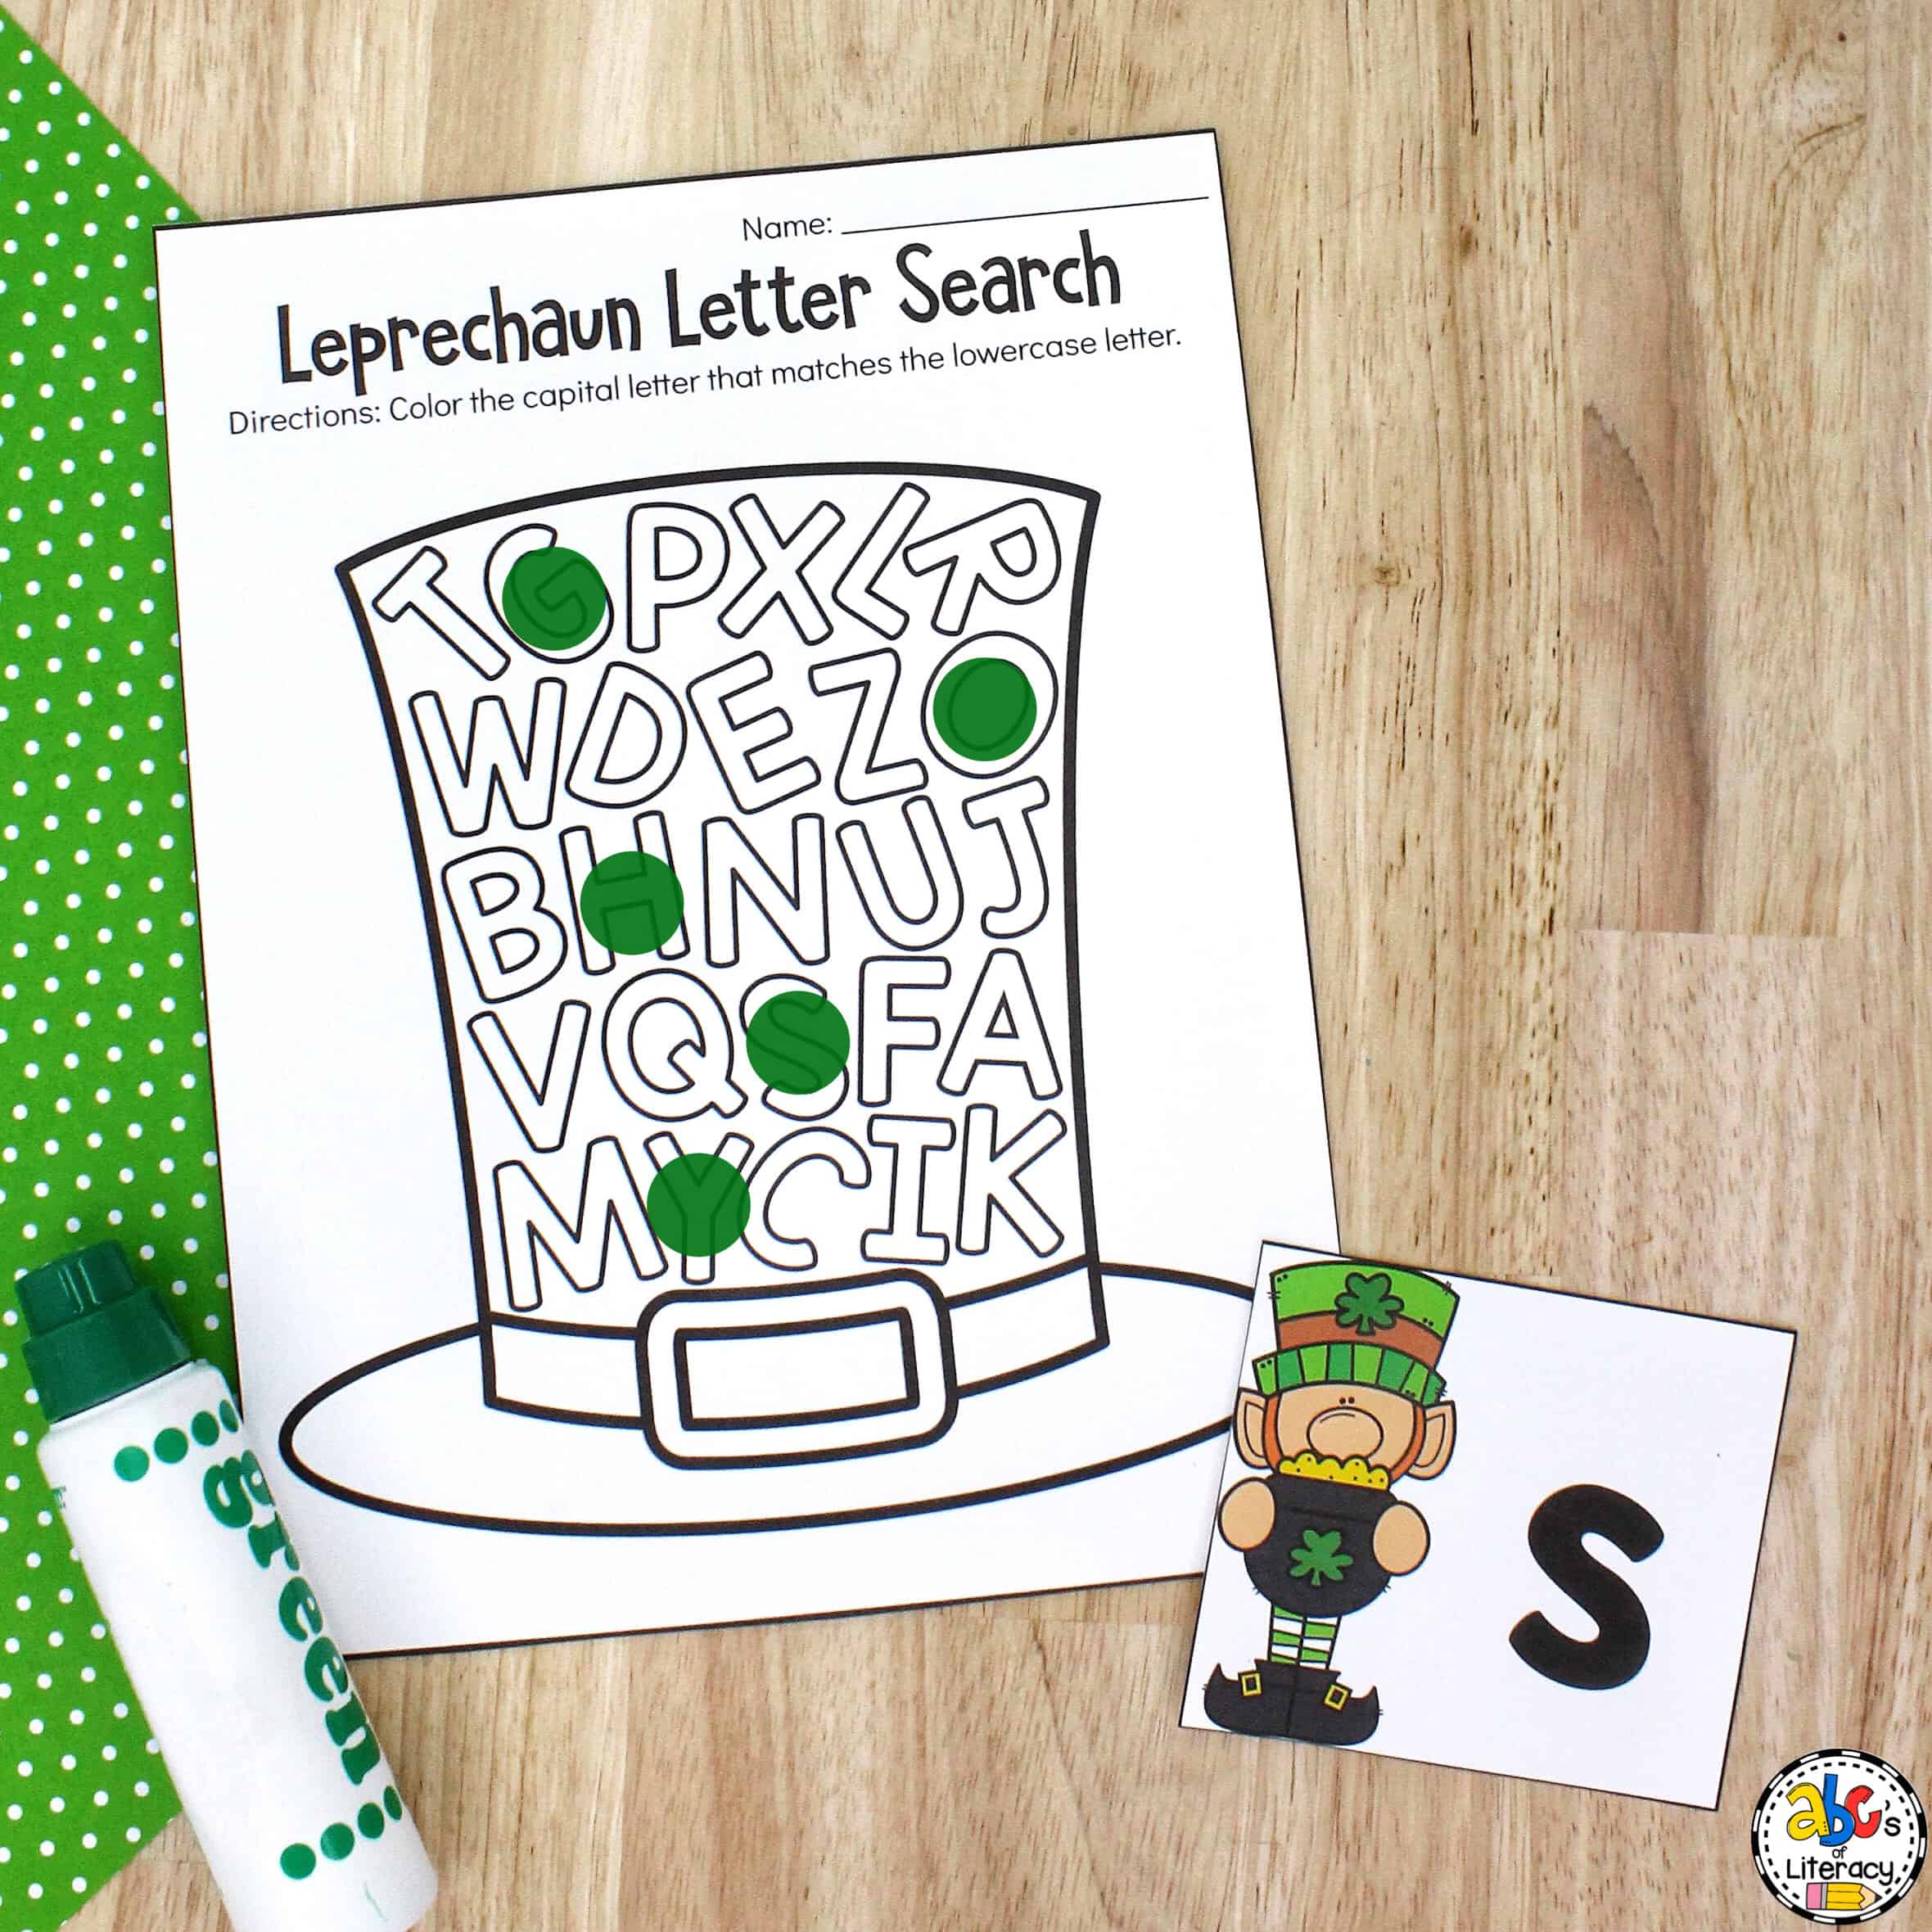 Leprechaun letter search activity